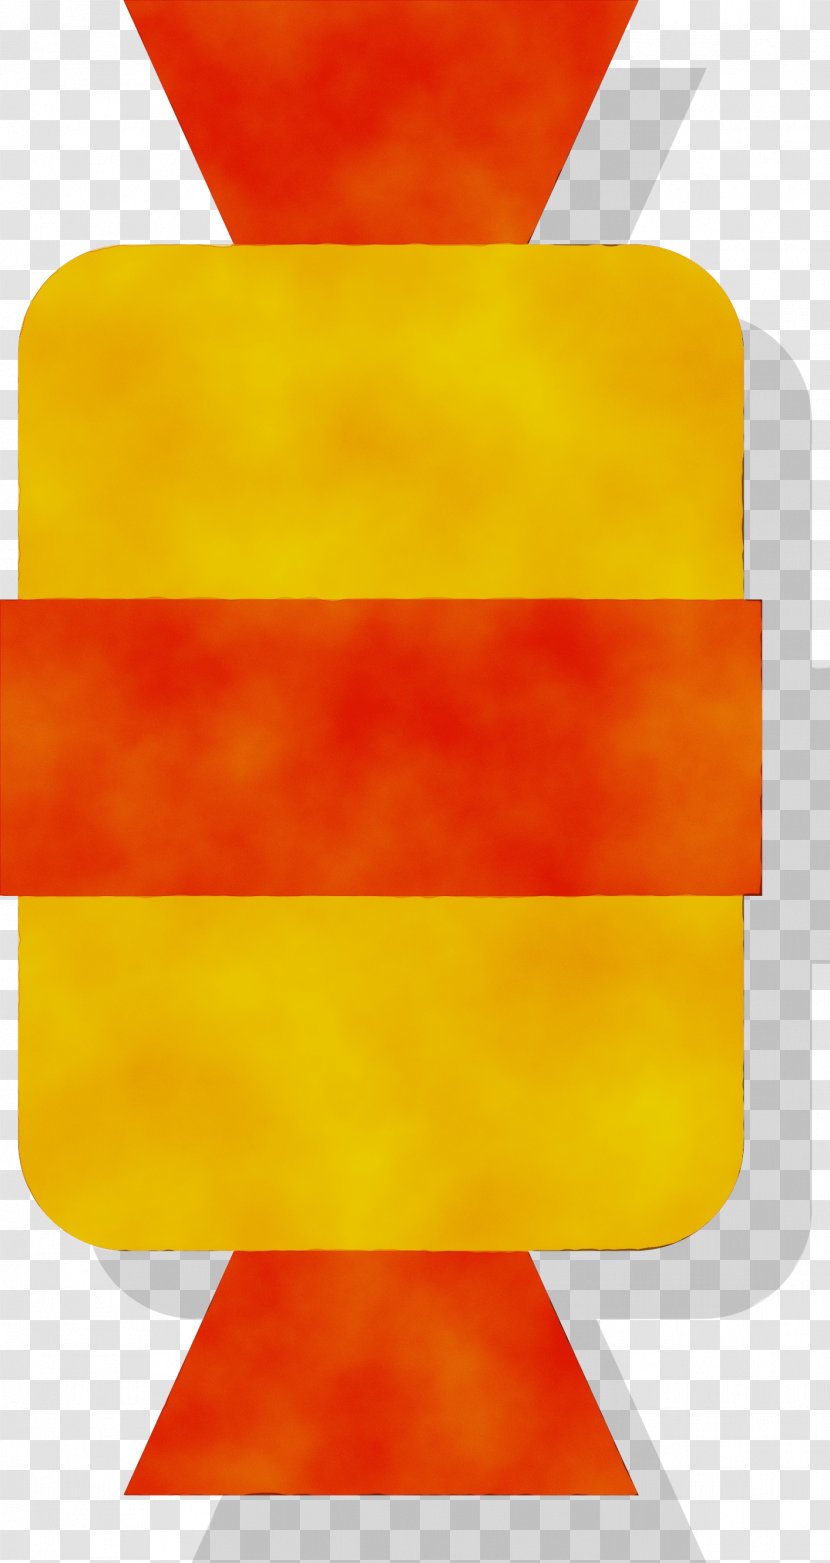 Orange - Rectangle - Material Property Transparent PNG